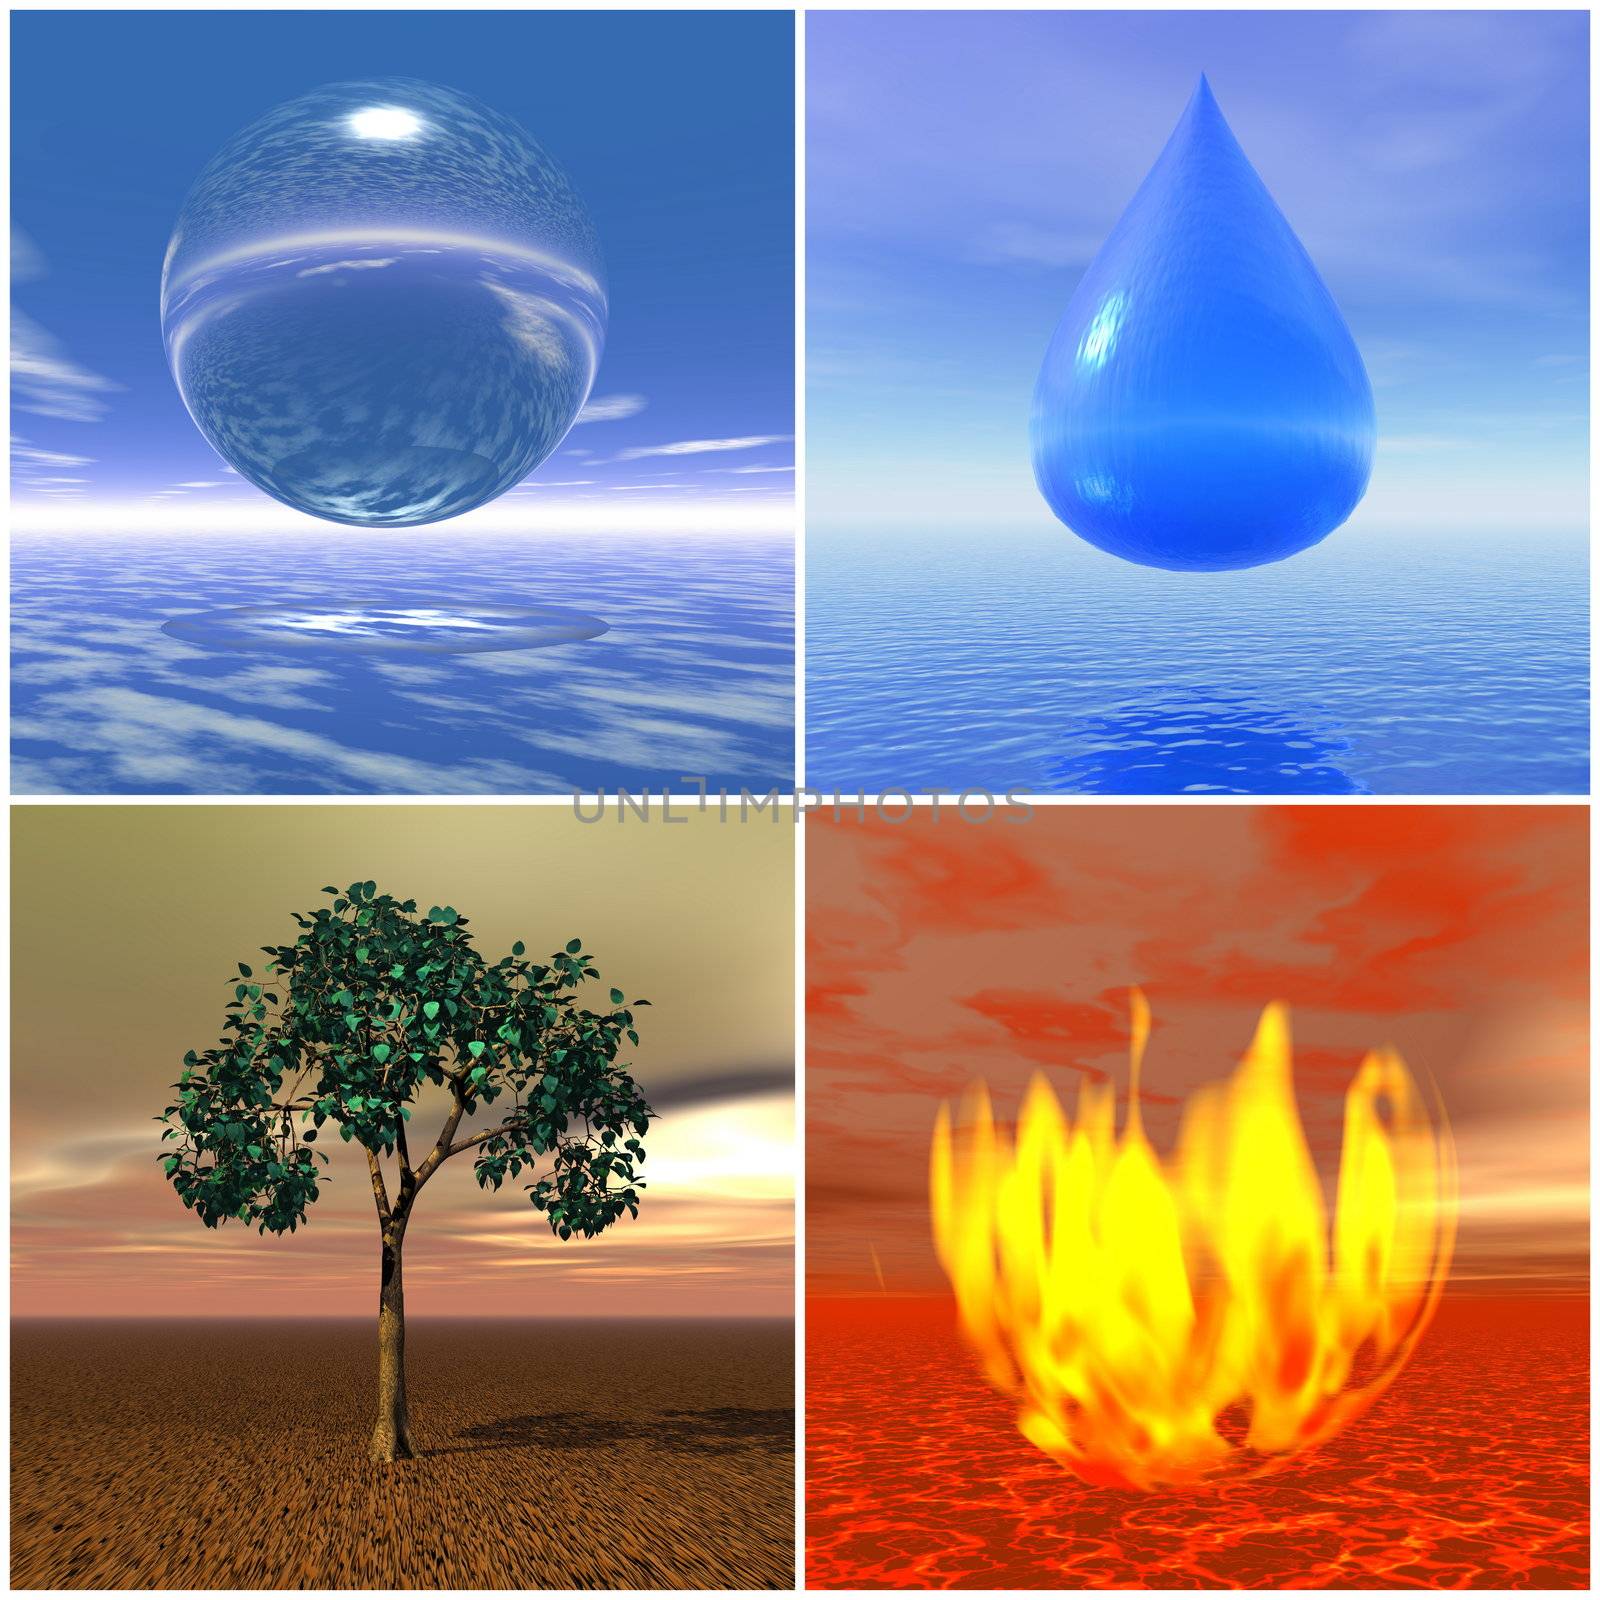 Four elements by Elenaphotos21